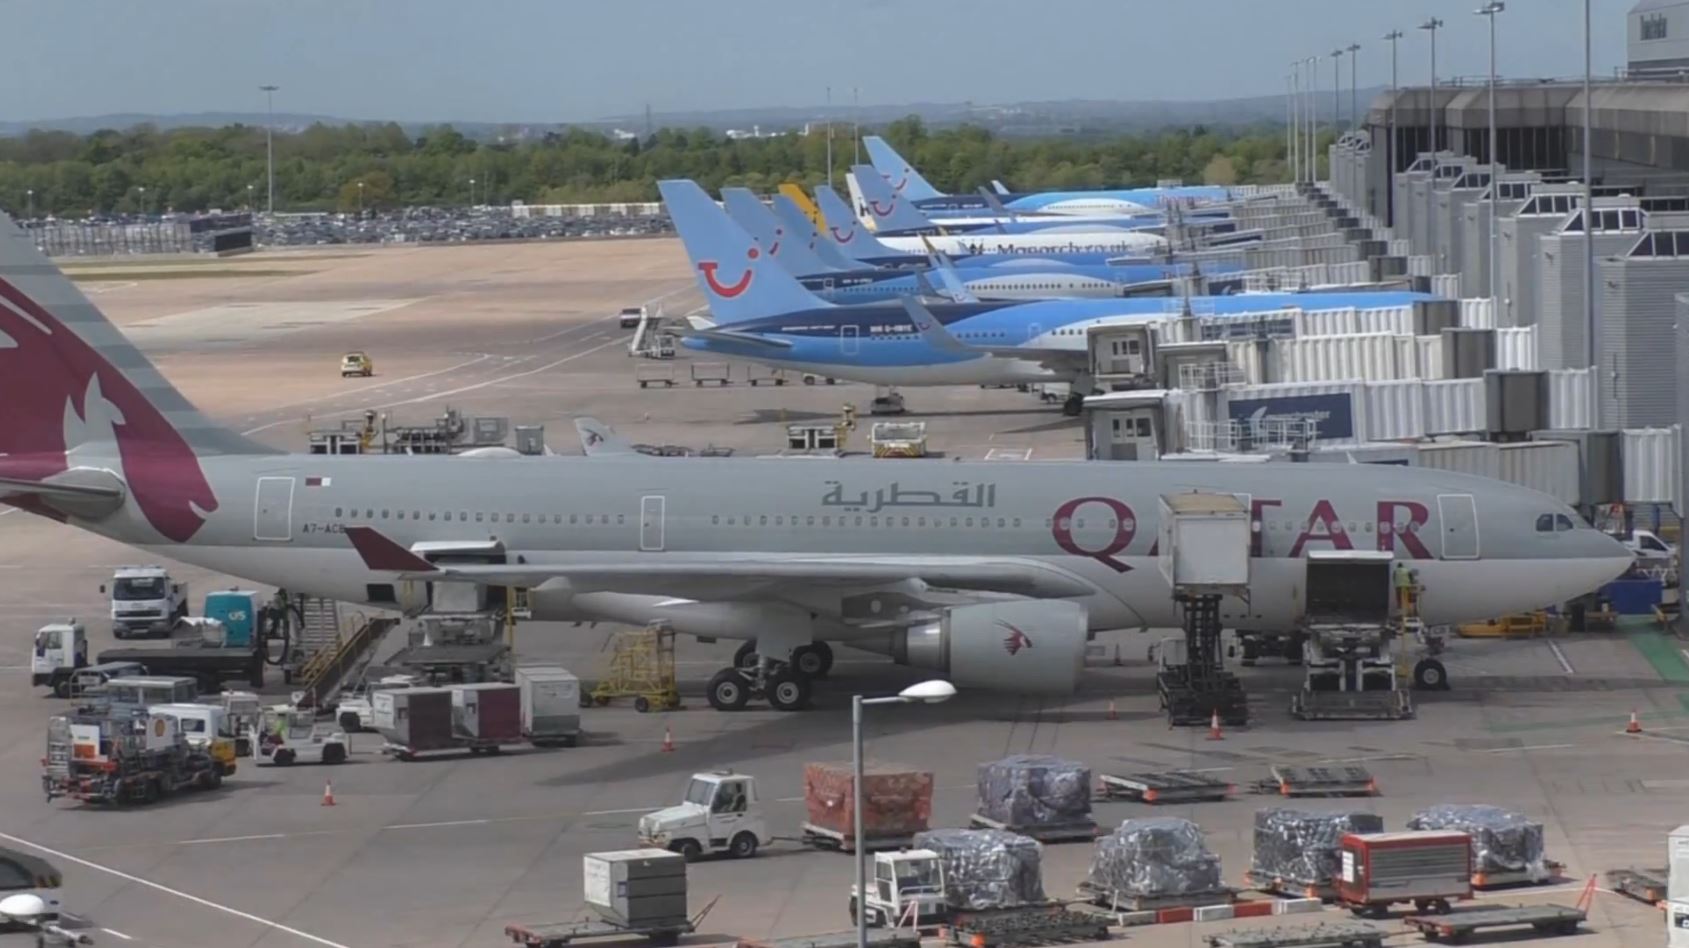 Virgin Atlantic and Qatar Airways Gate Operation Timelapse